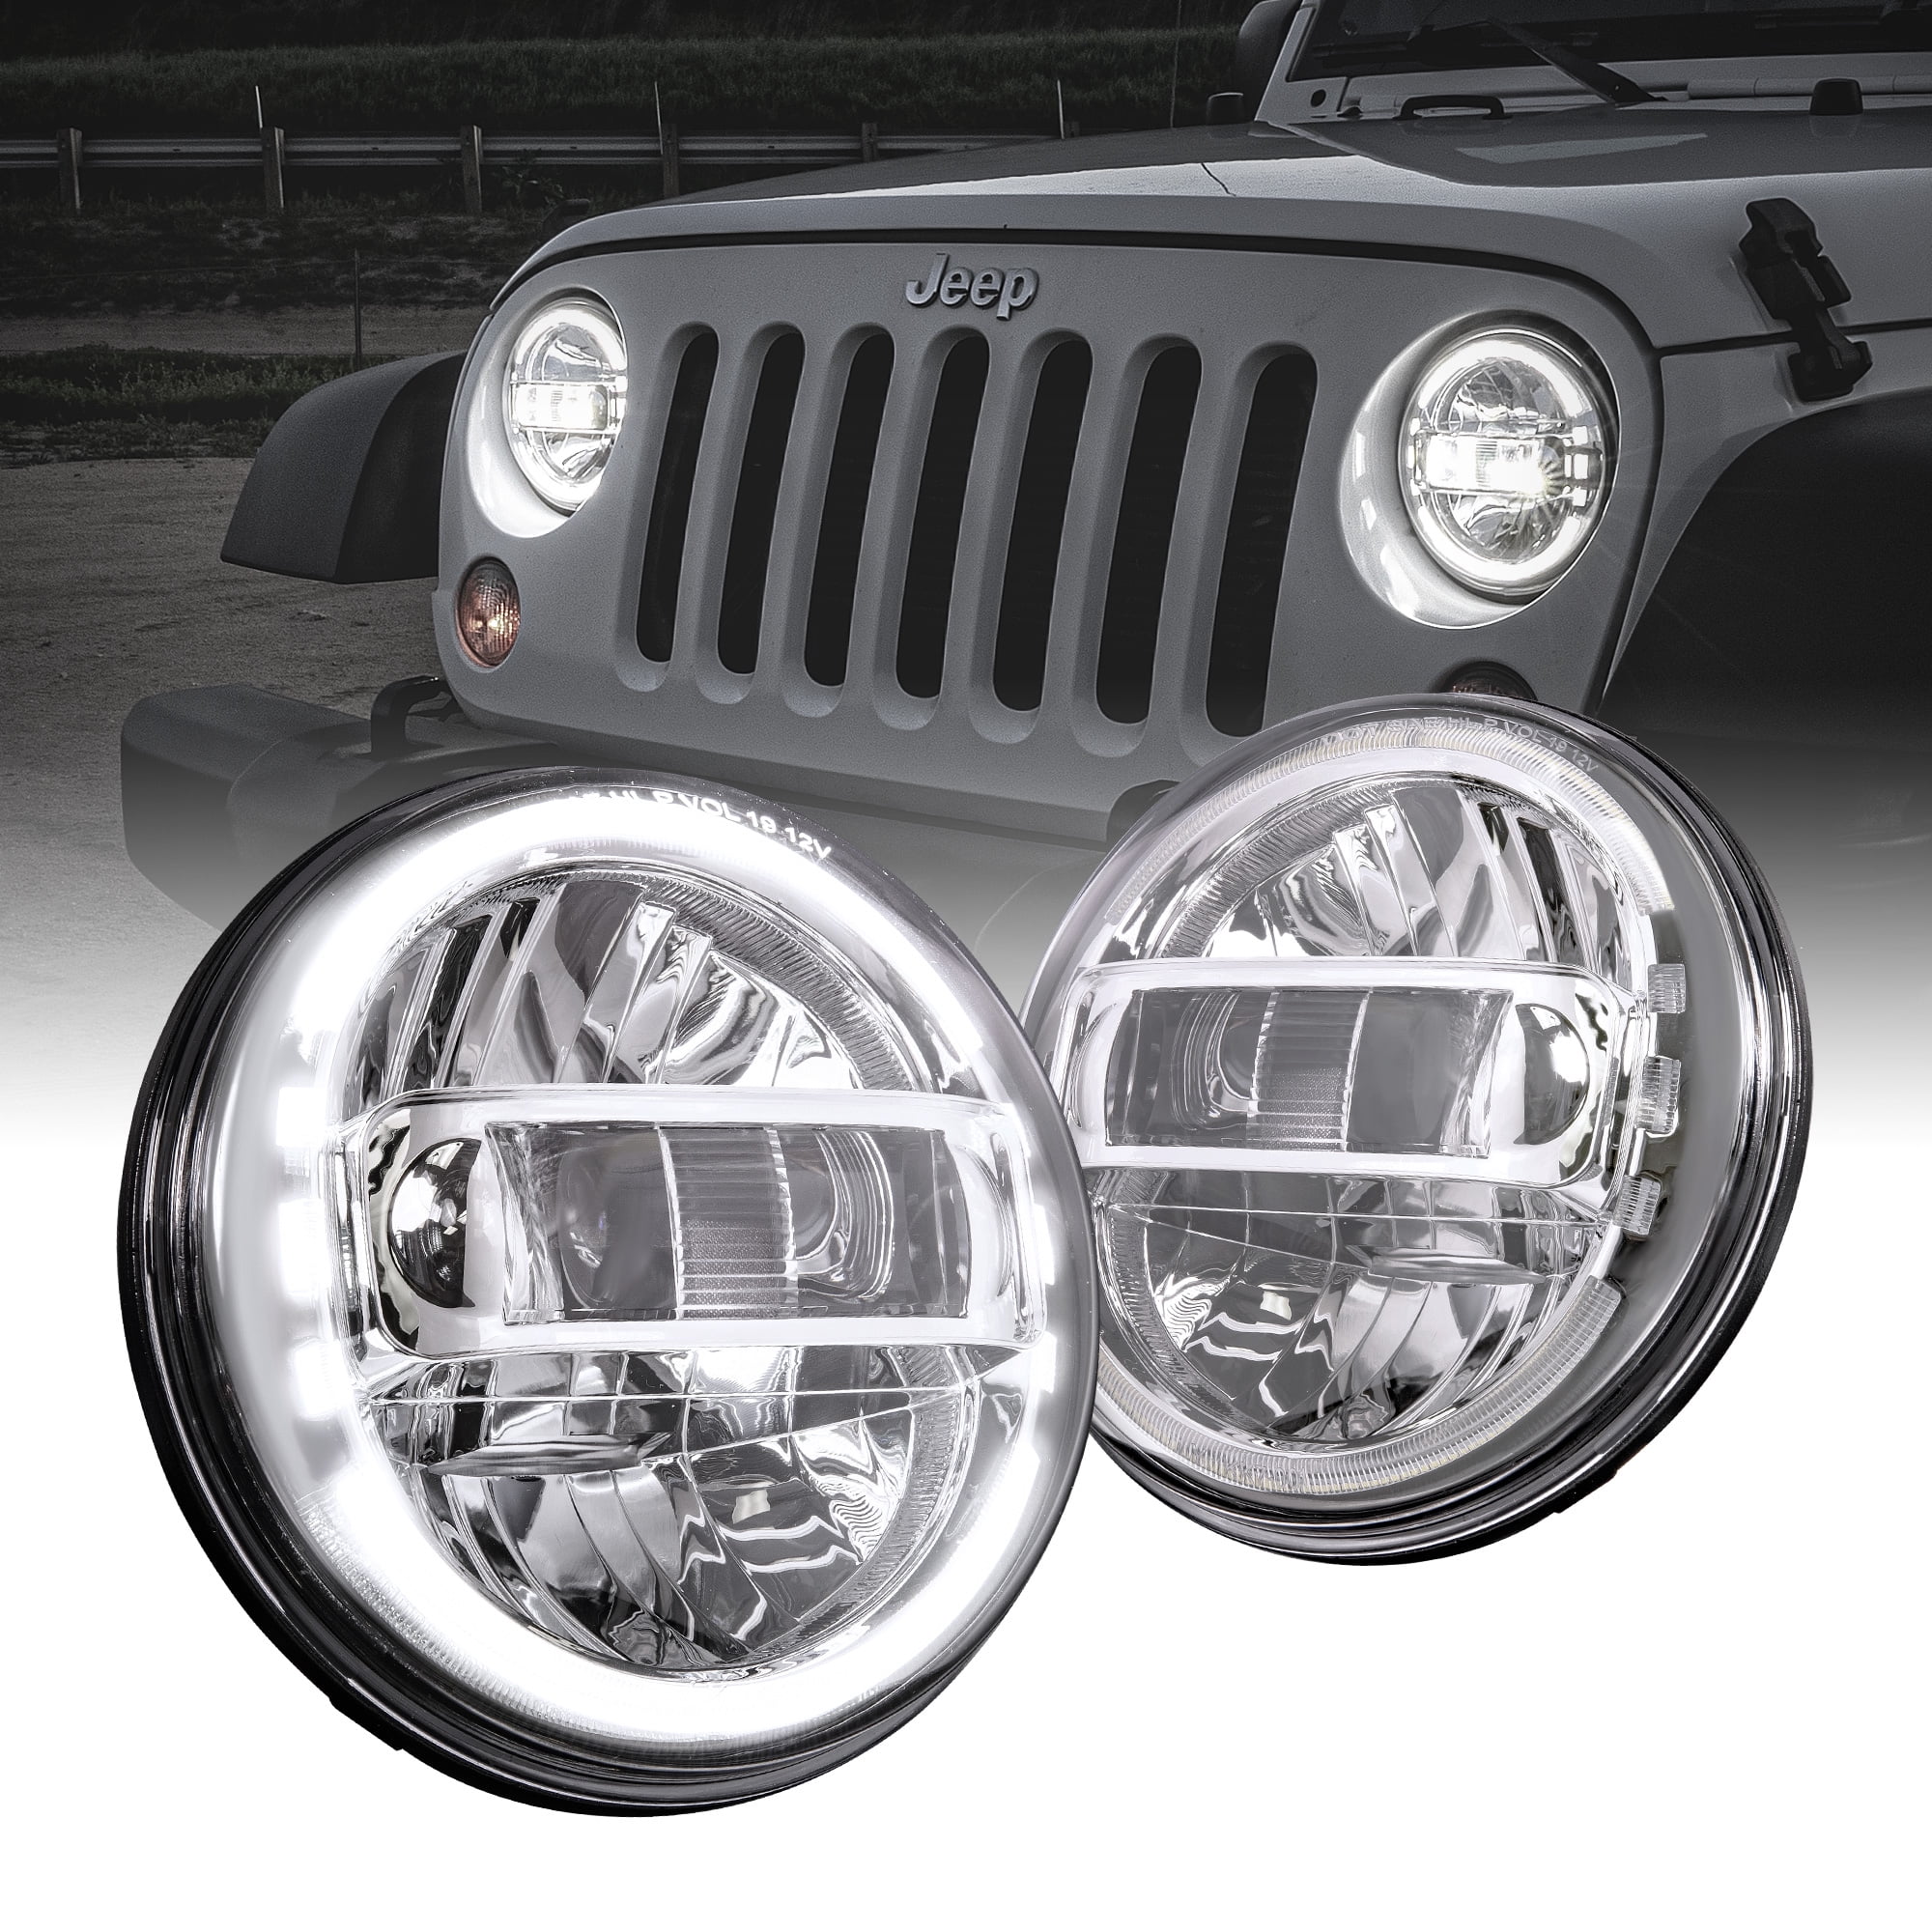 2PCS 7" CREE LED Headlight Amber Halo Headlamp For Jeep Wrangler JK CJ TJ Hummer 